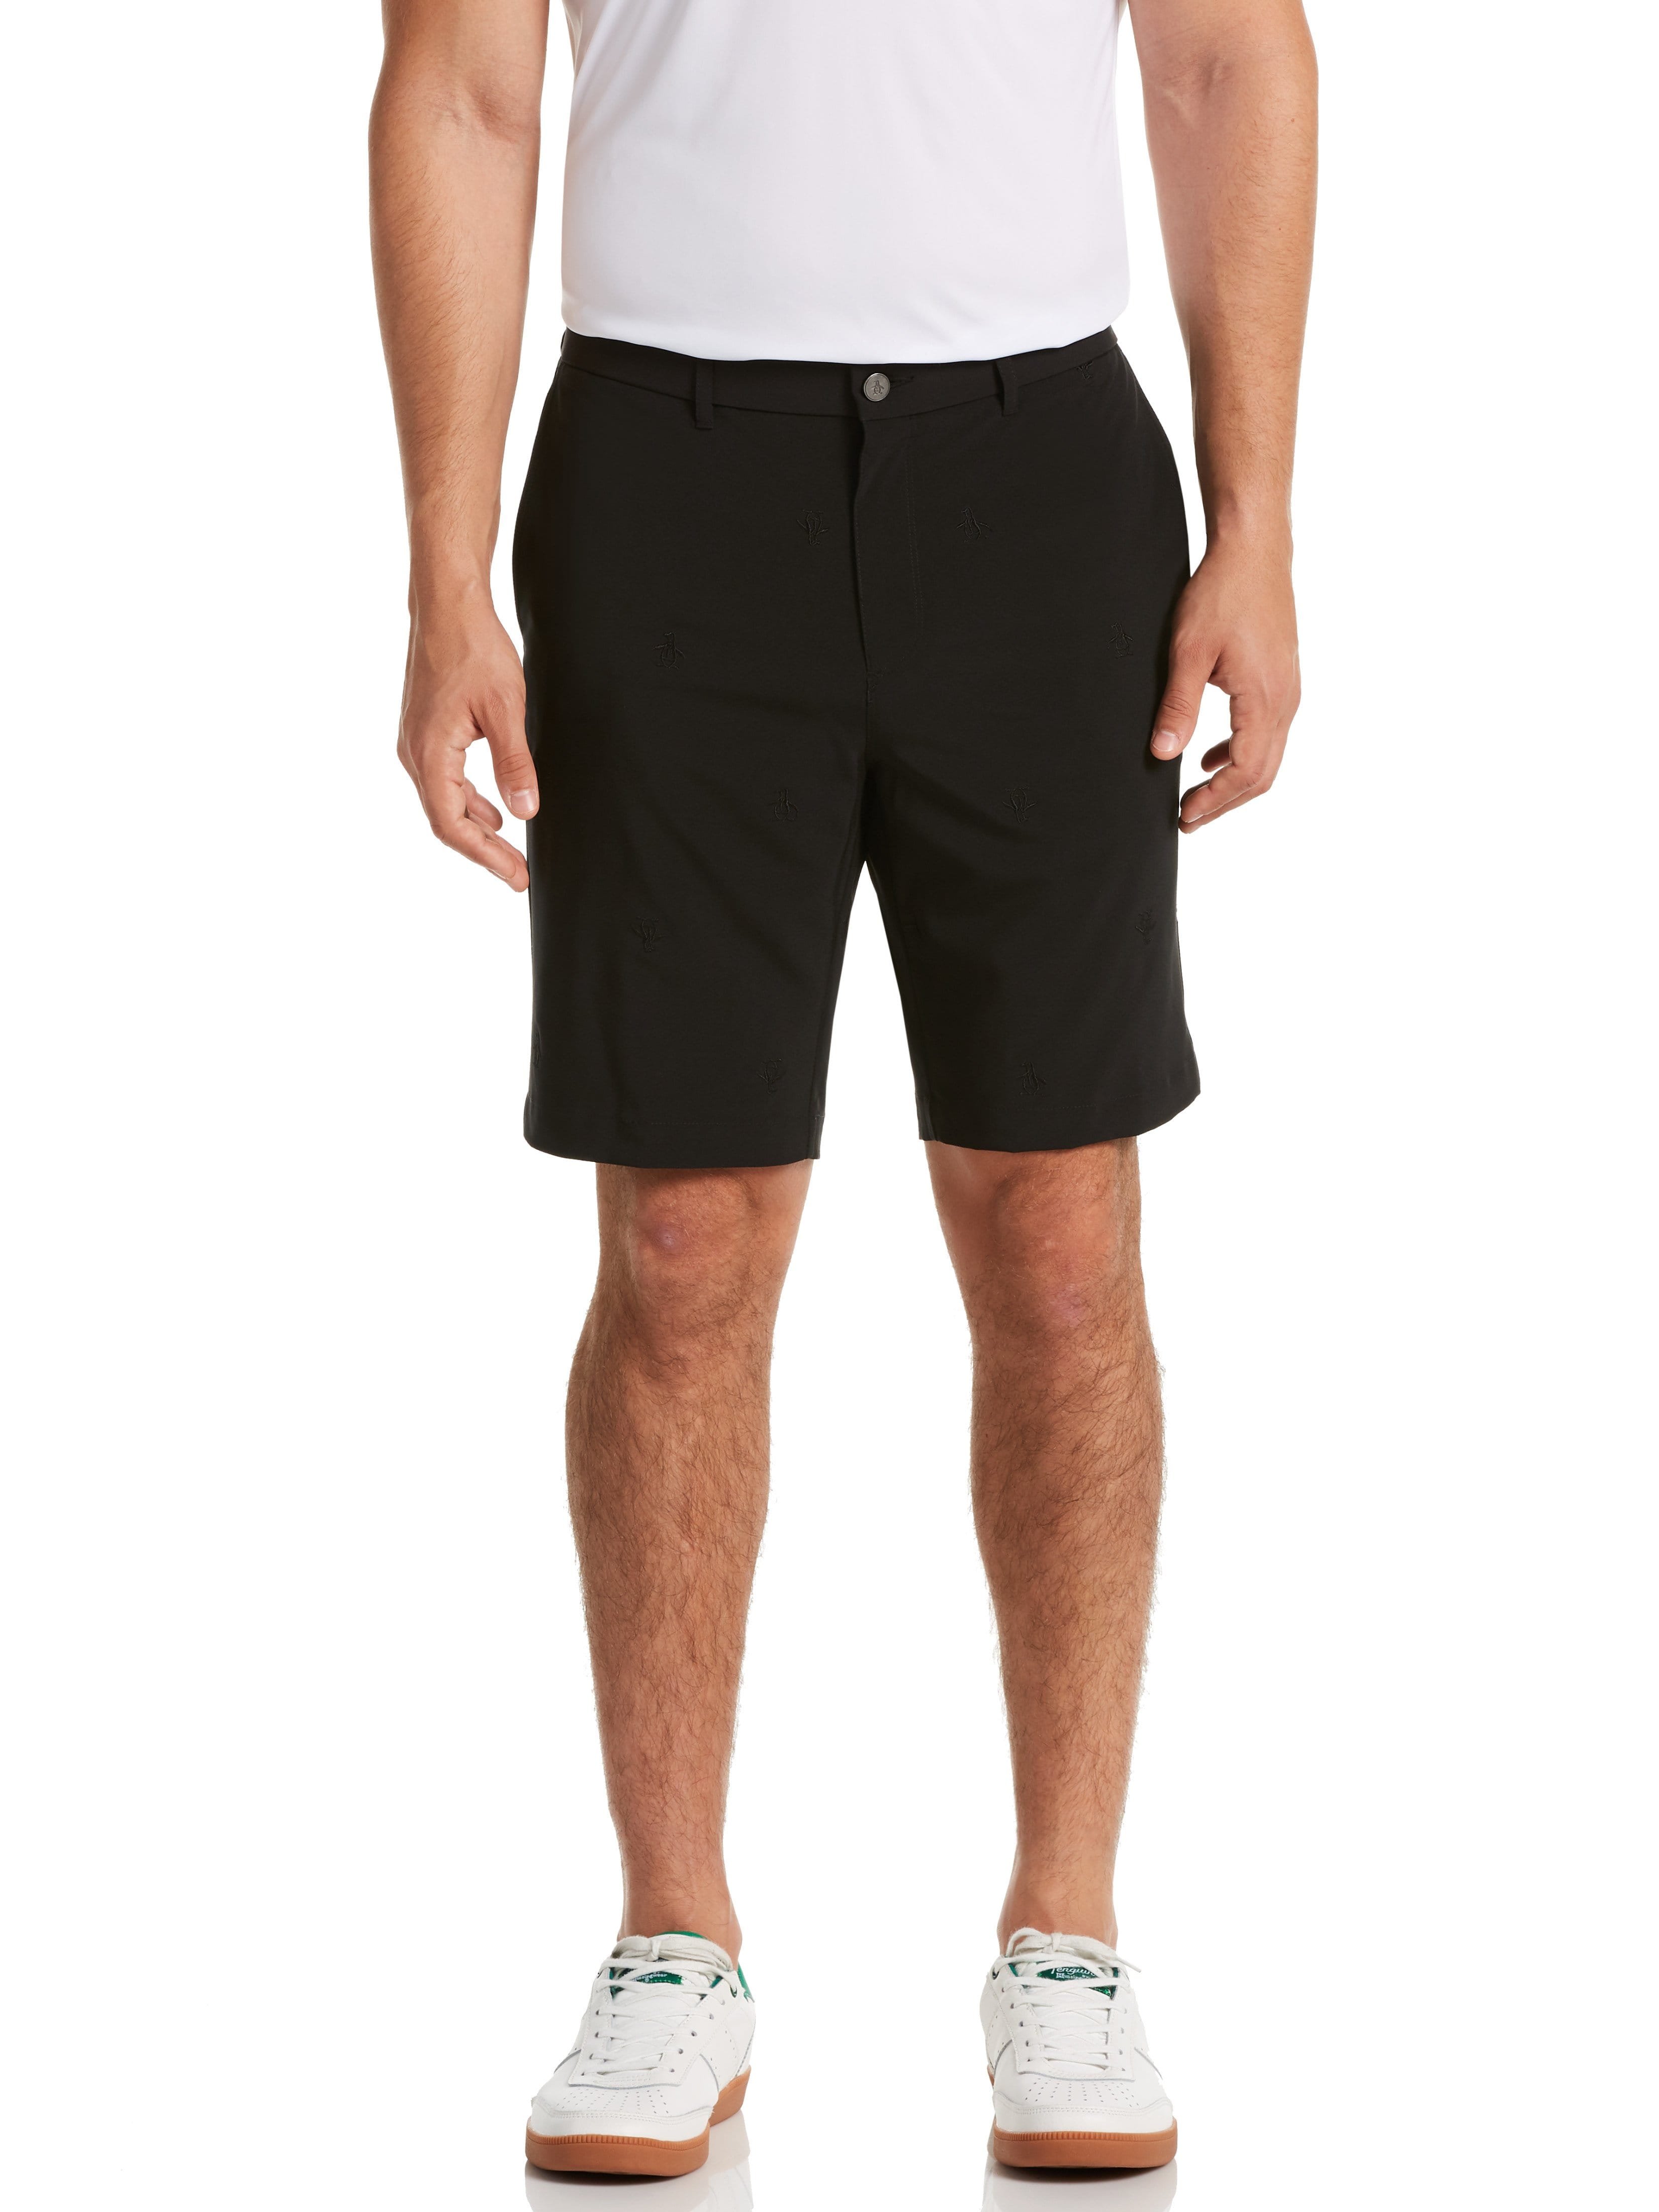 Original Penguin Mens Allover Pete Embroidered Golf Shorts, Size 40, Black, Polyester/Spandex | Golf Apparel Shop